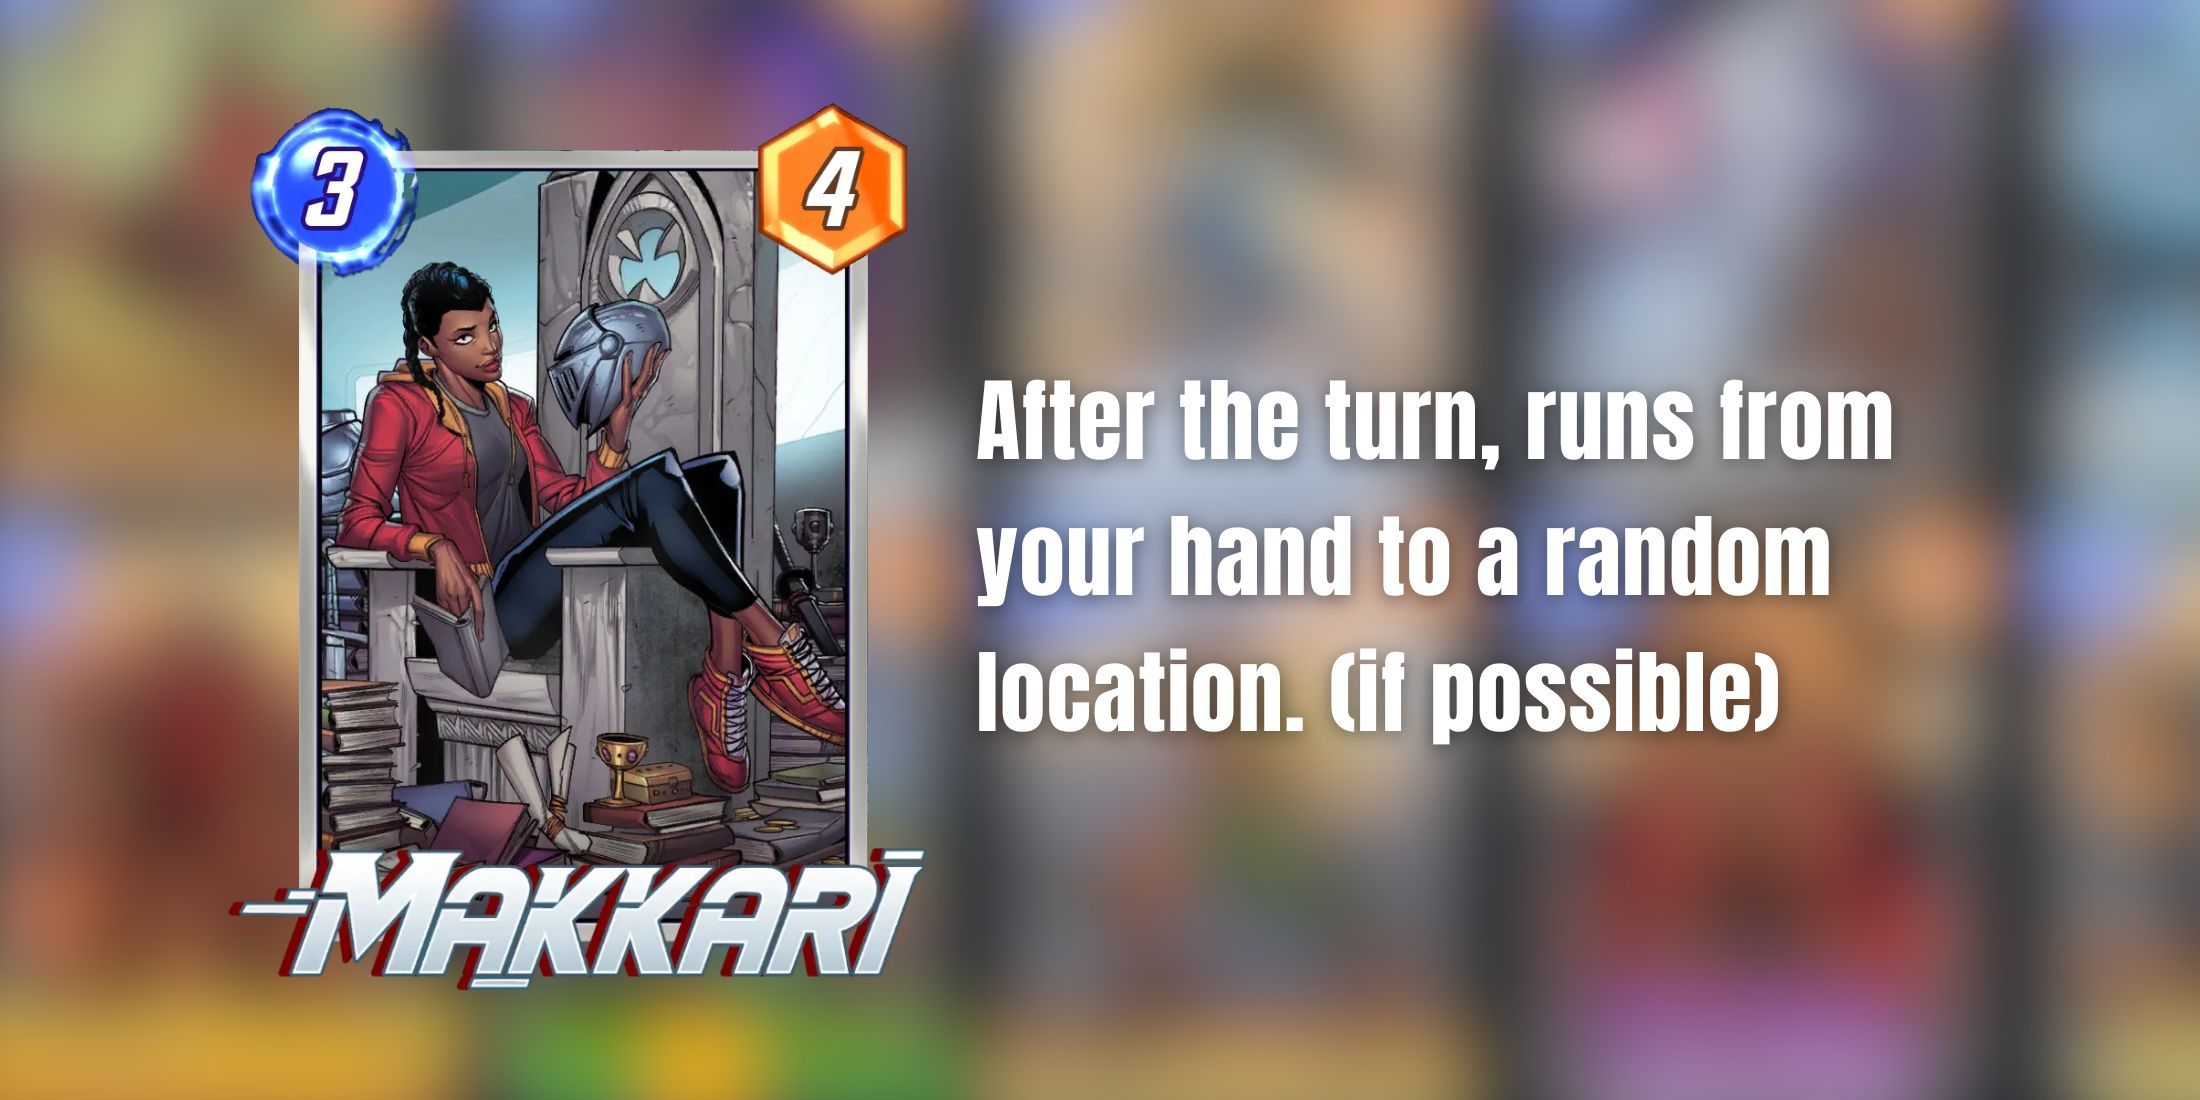 makkari ability in marvel snap.